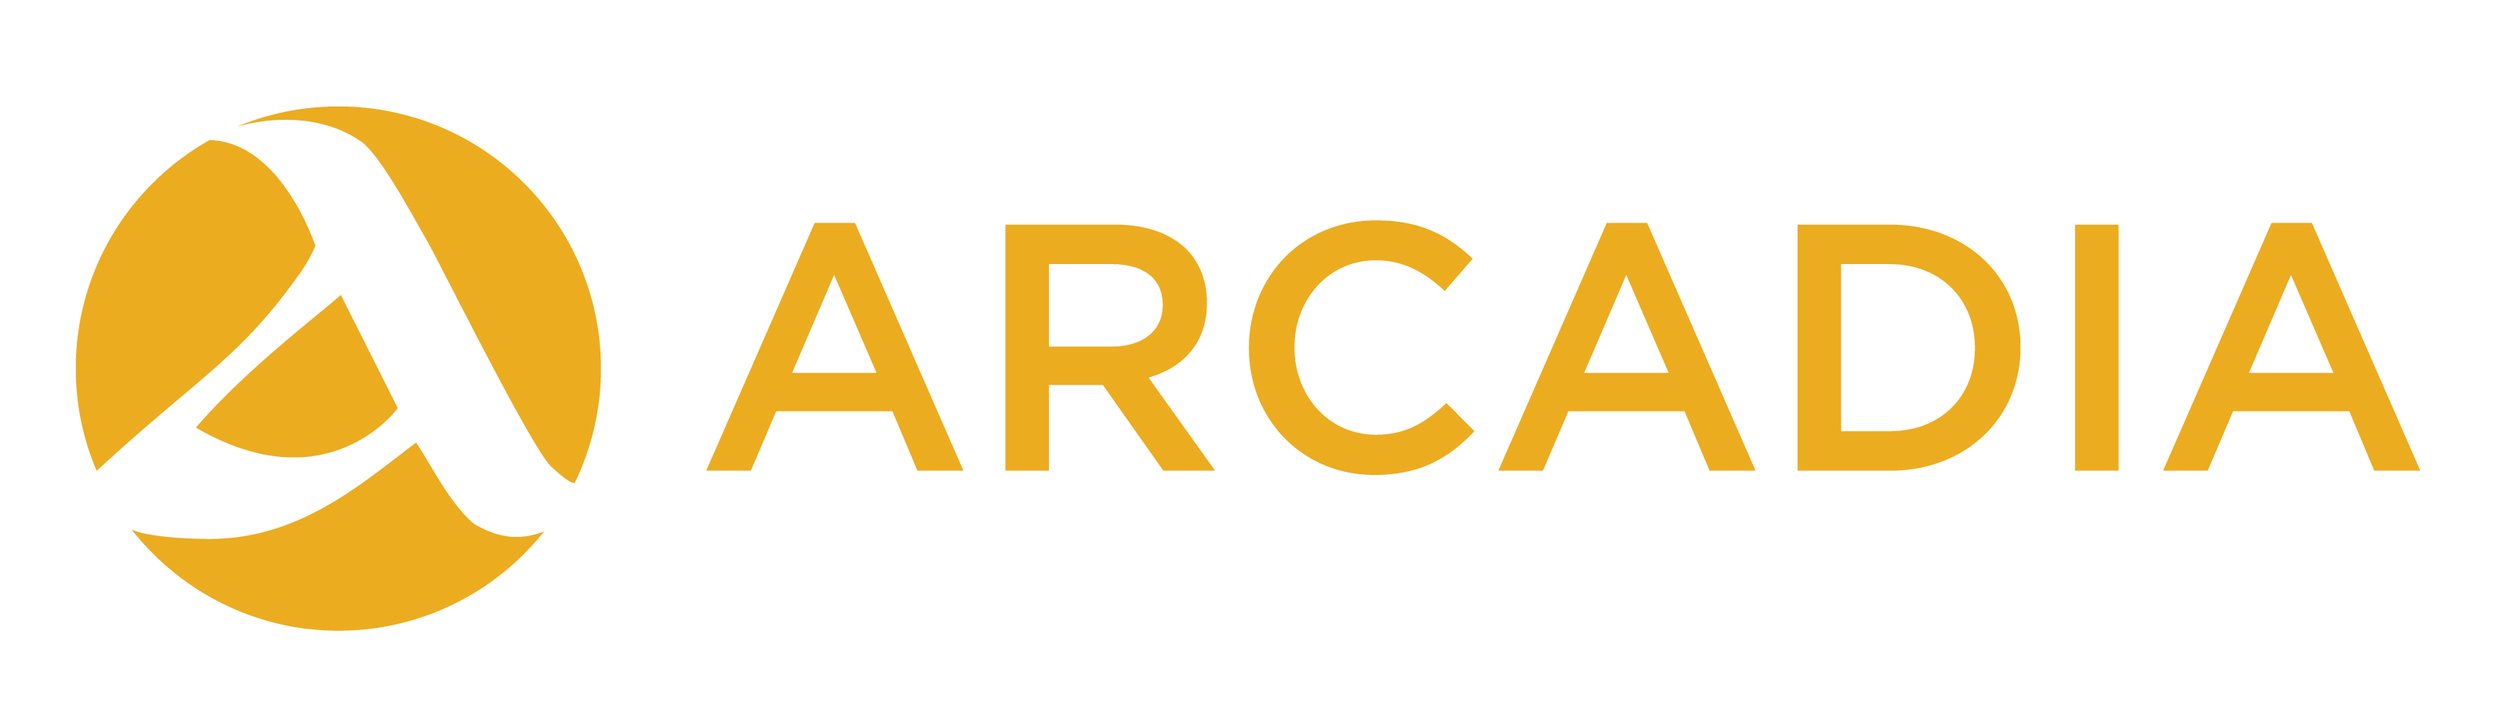 Arcadia Logo - Logotype yellow on transparent.jpg